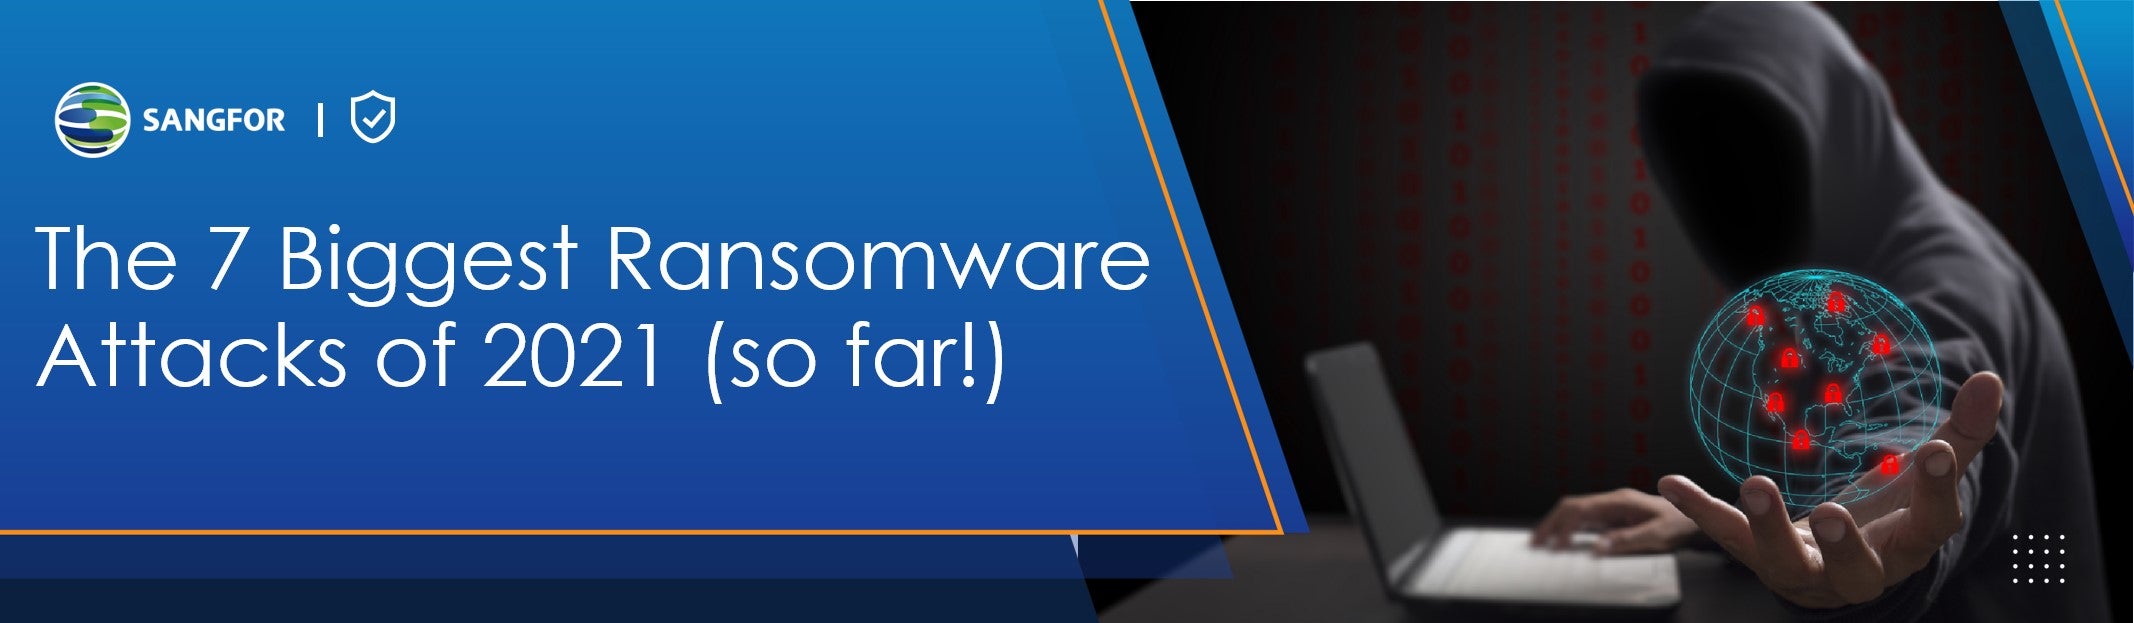 7 biggest ransomware attacks